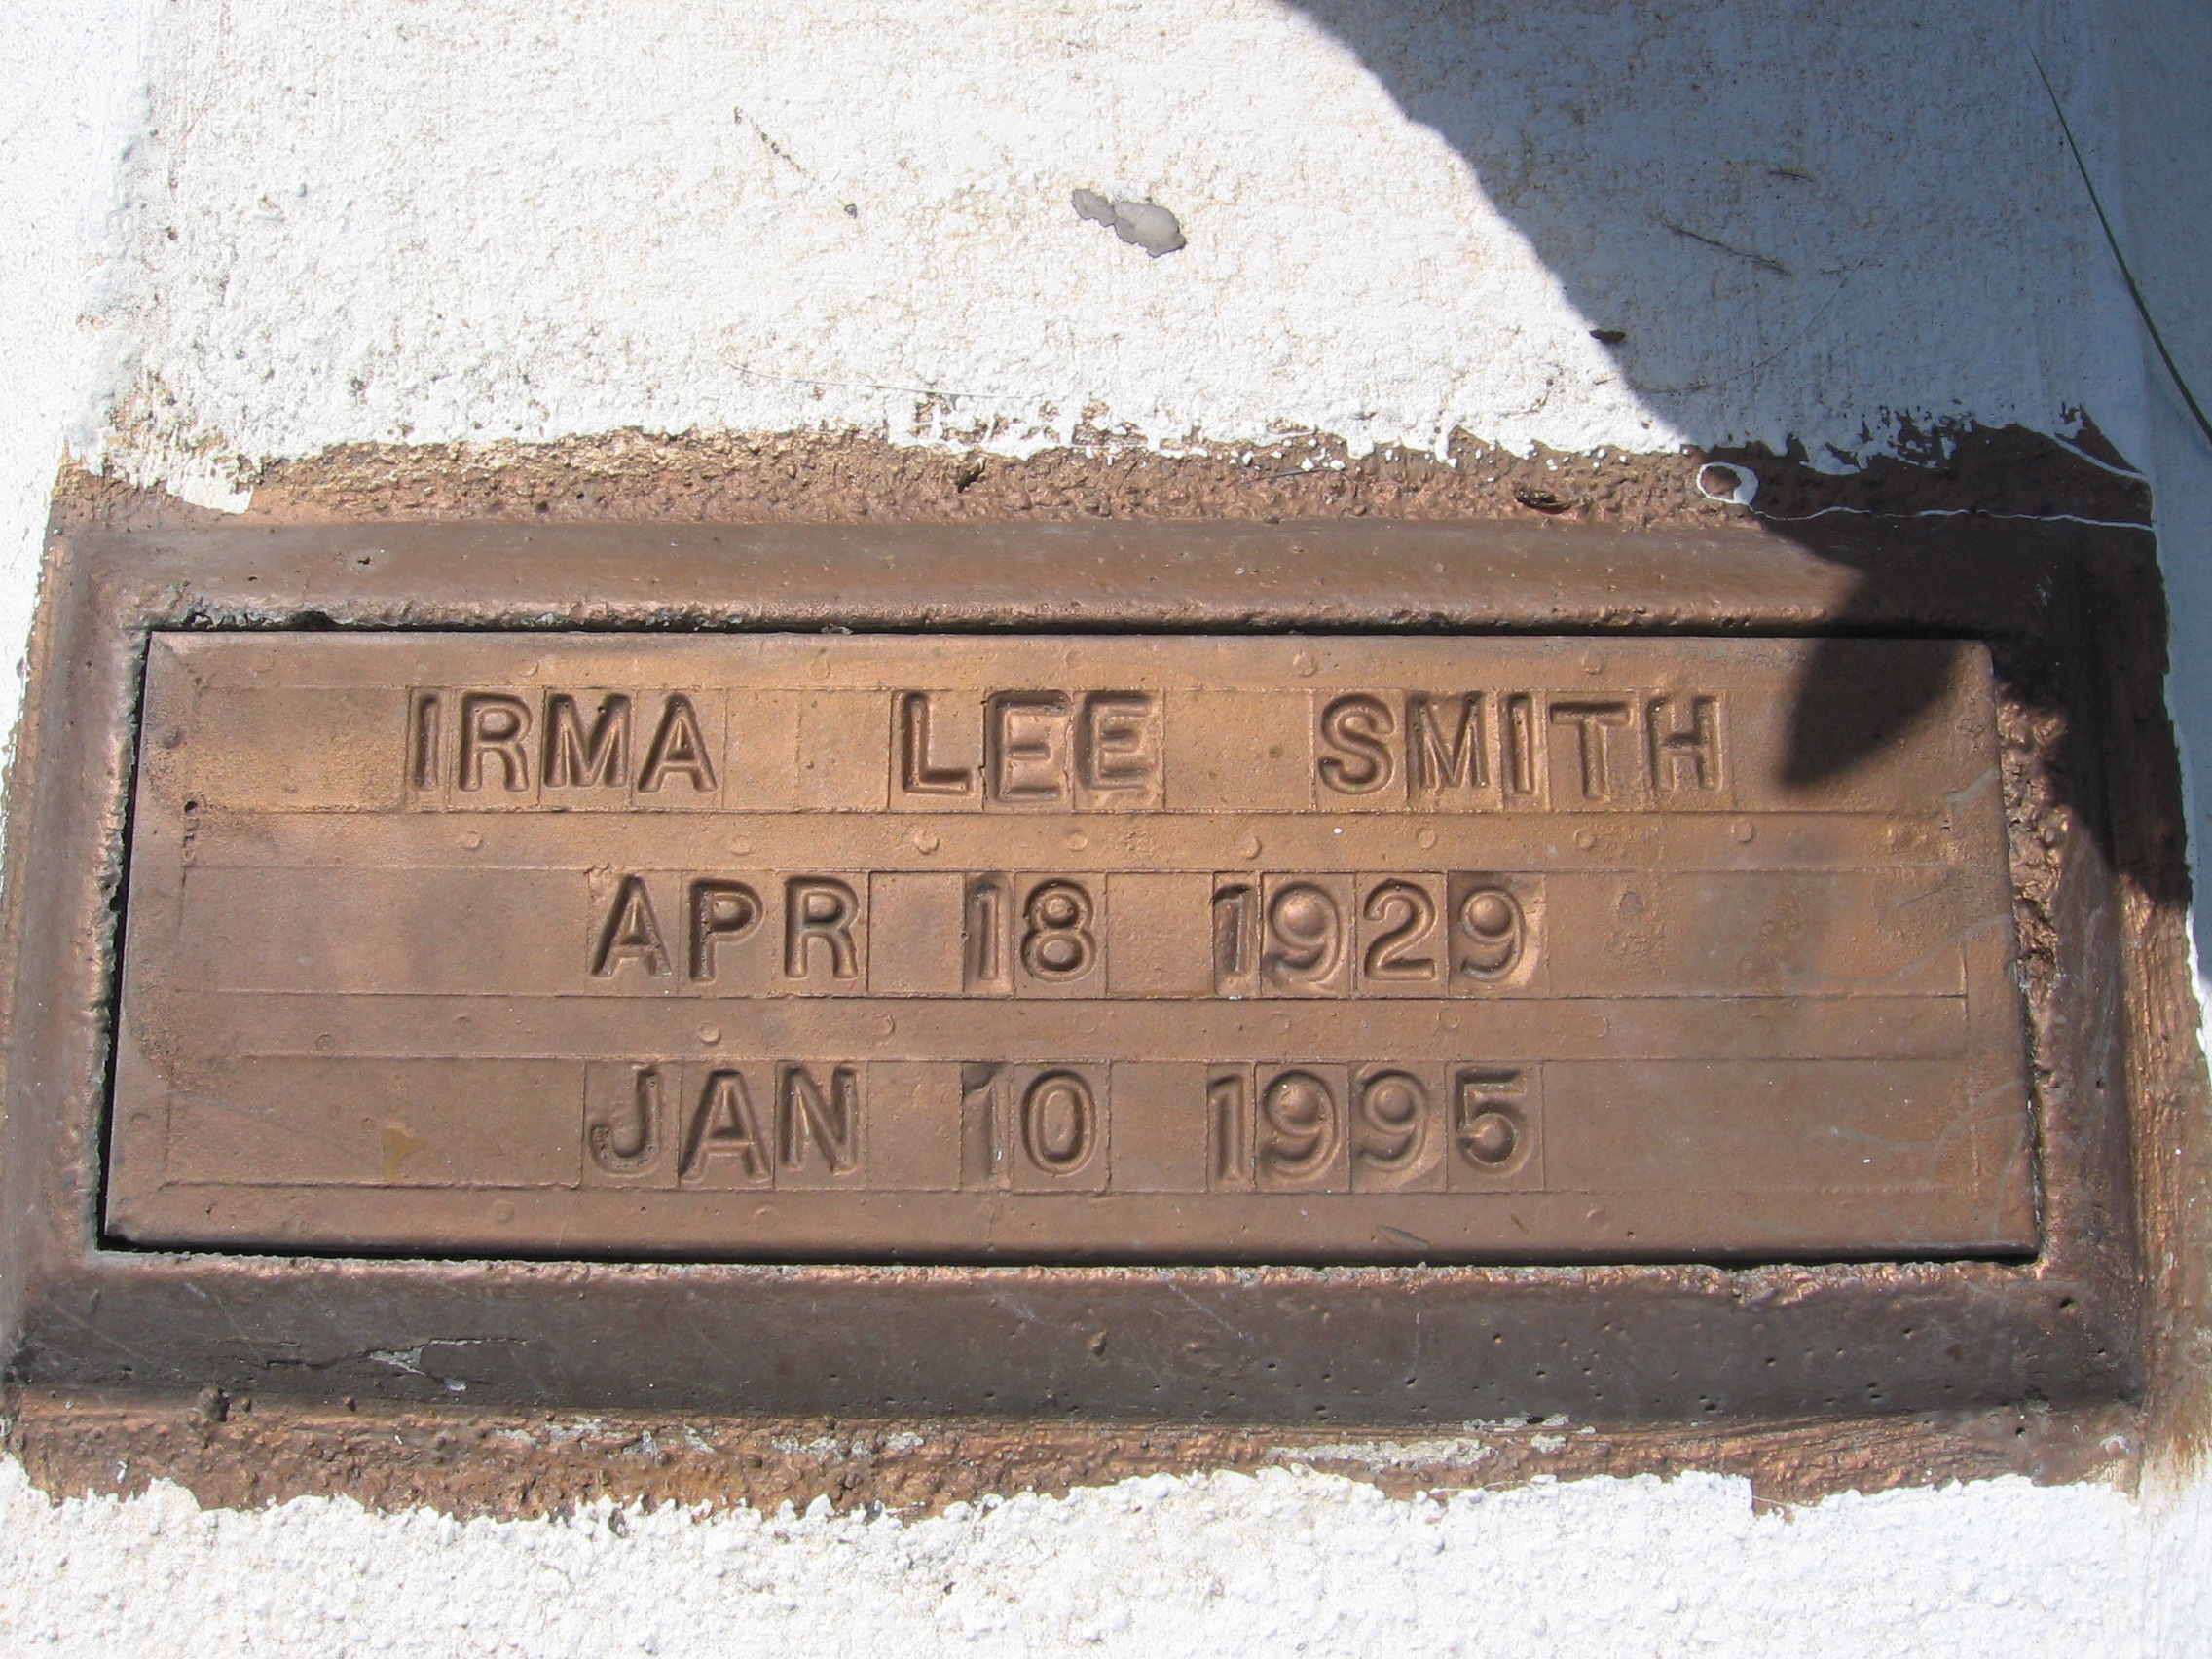 Irma Lee Smith